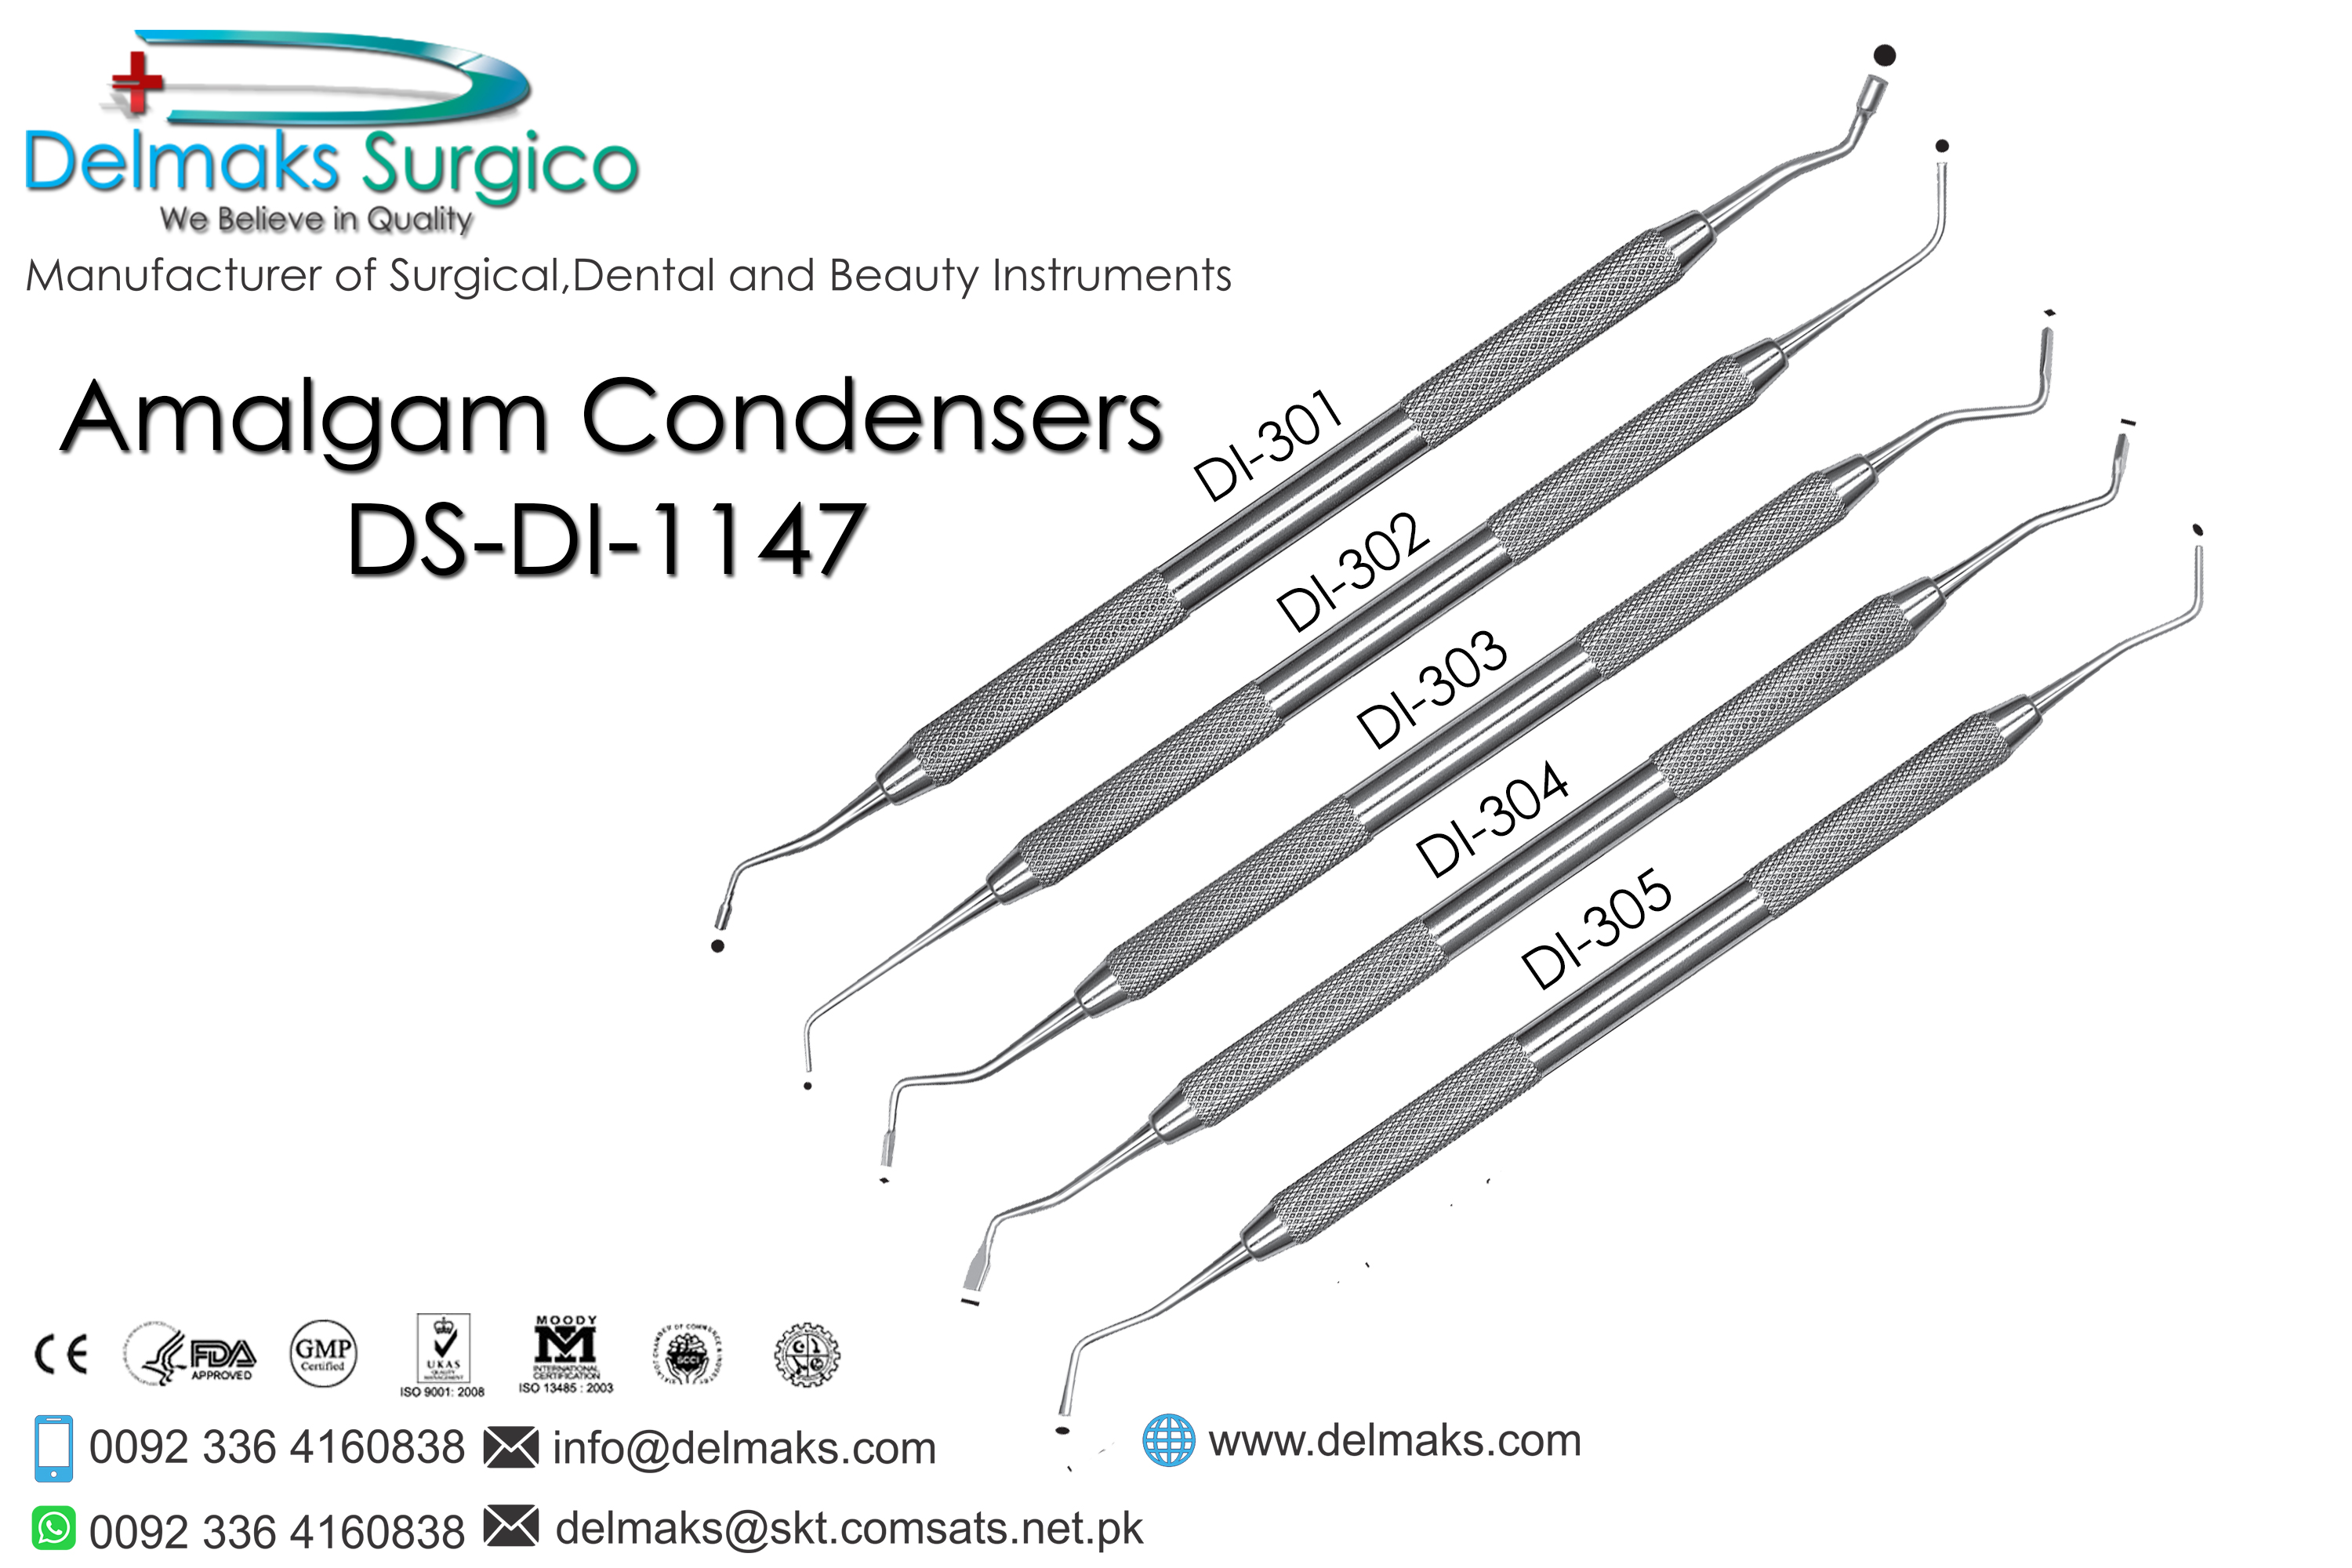 Amalgam Condensers-Restorative Instruments-Dental Instruments-Delmaks Surgico